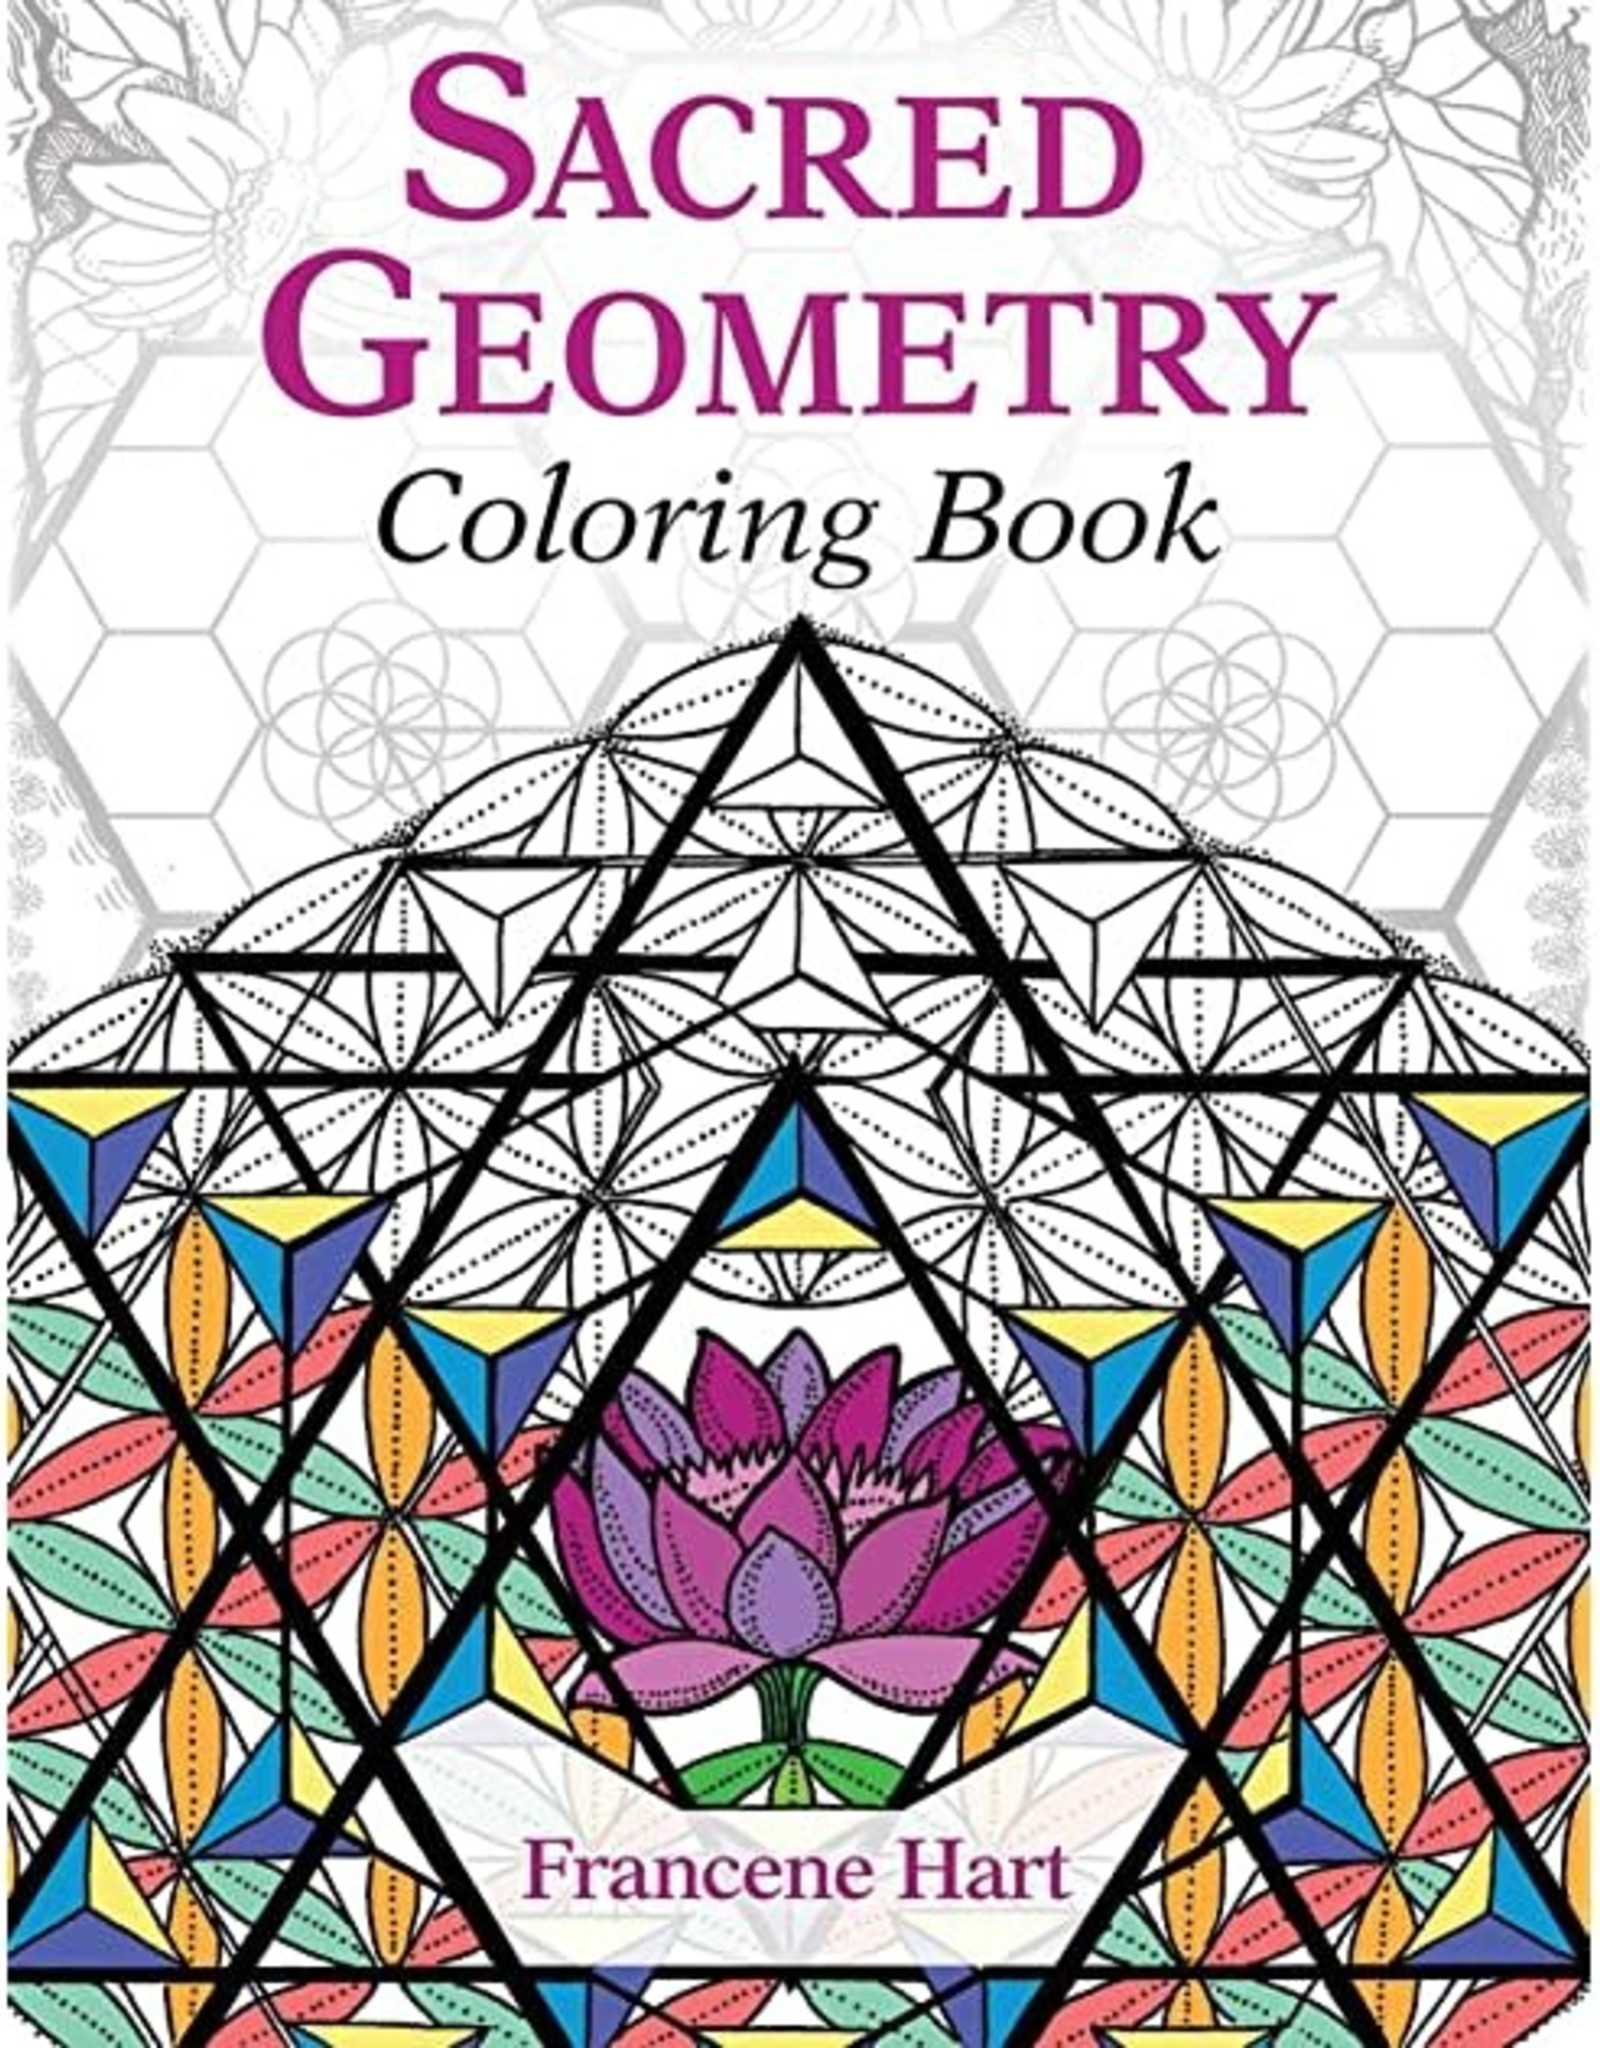 Francene Hart Sacred Geometry Coloring Book by Francene Hart